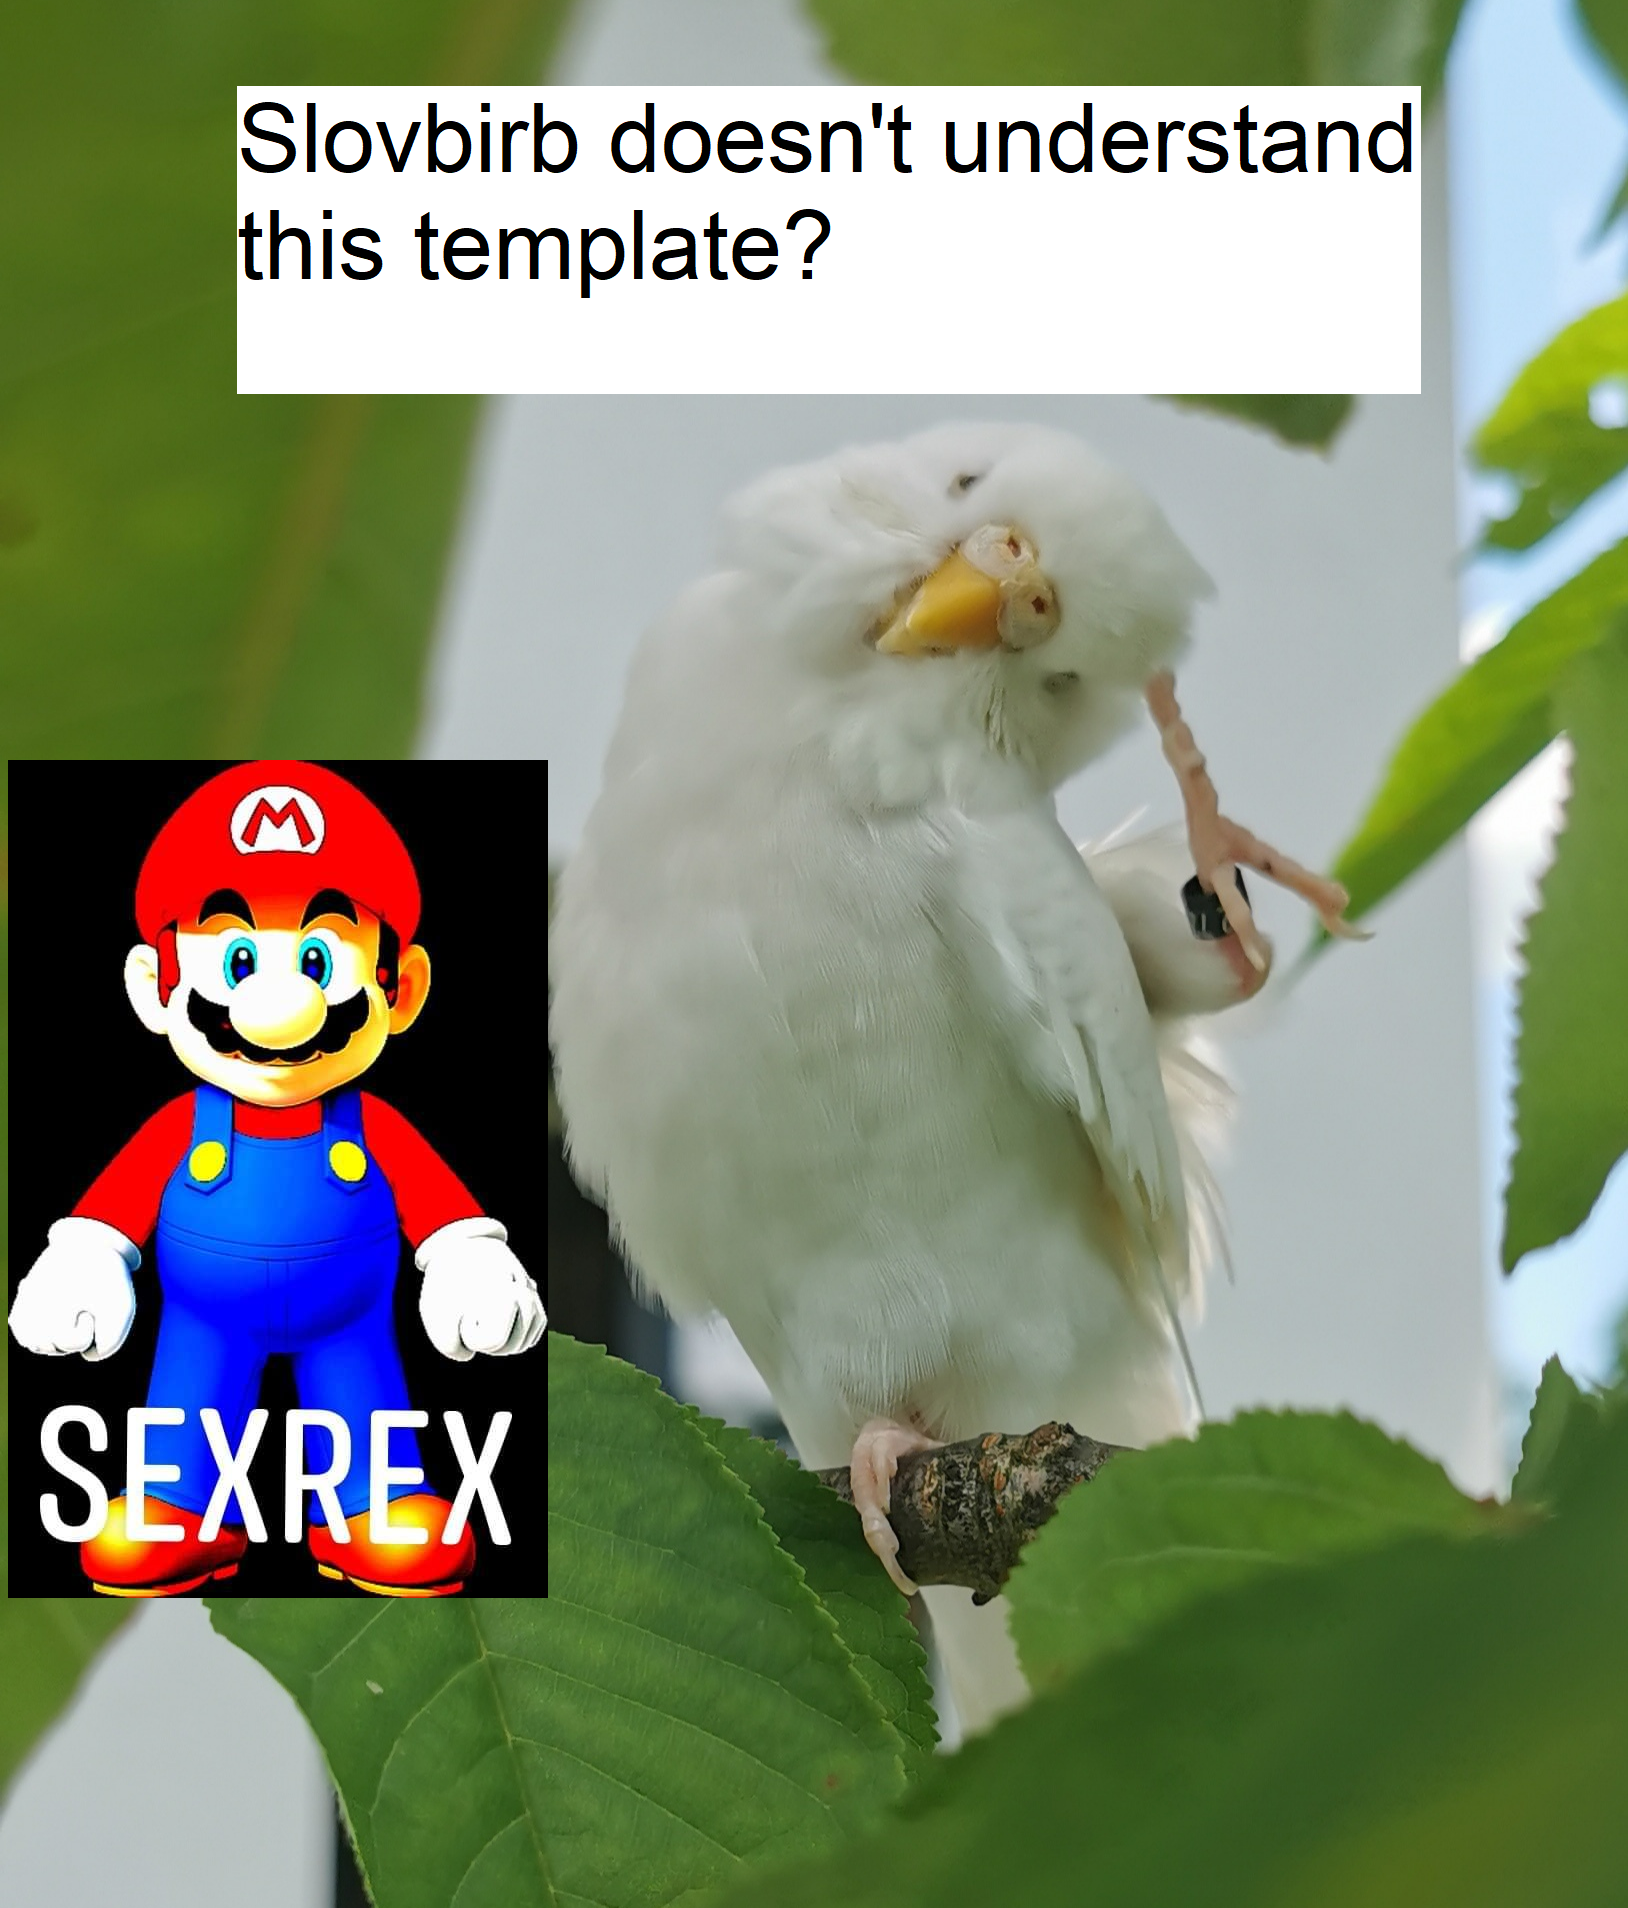 #penis #sexrex I don't get it #slovbirb